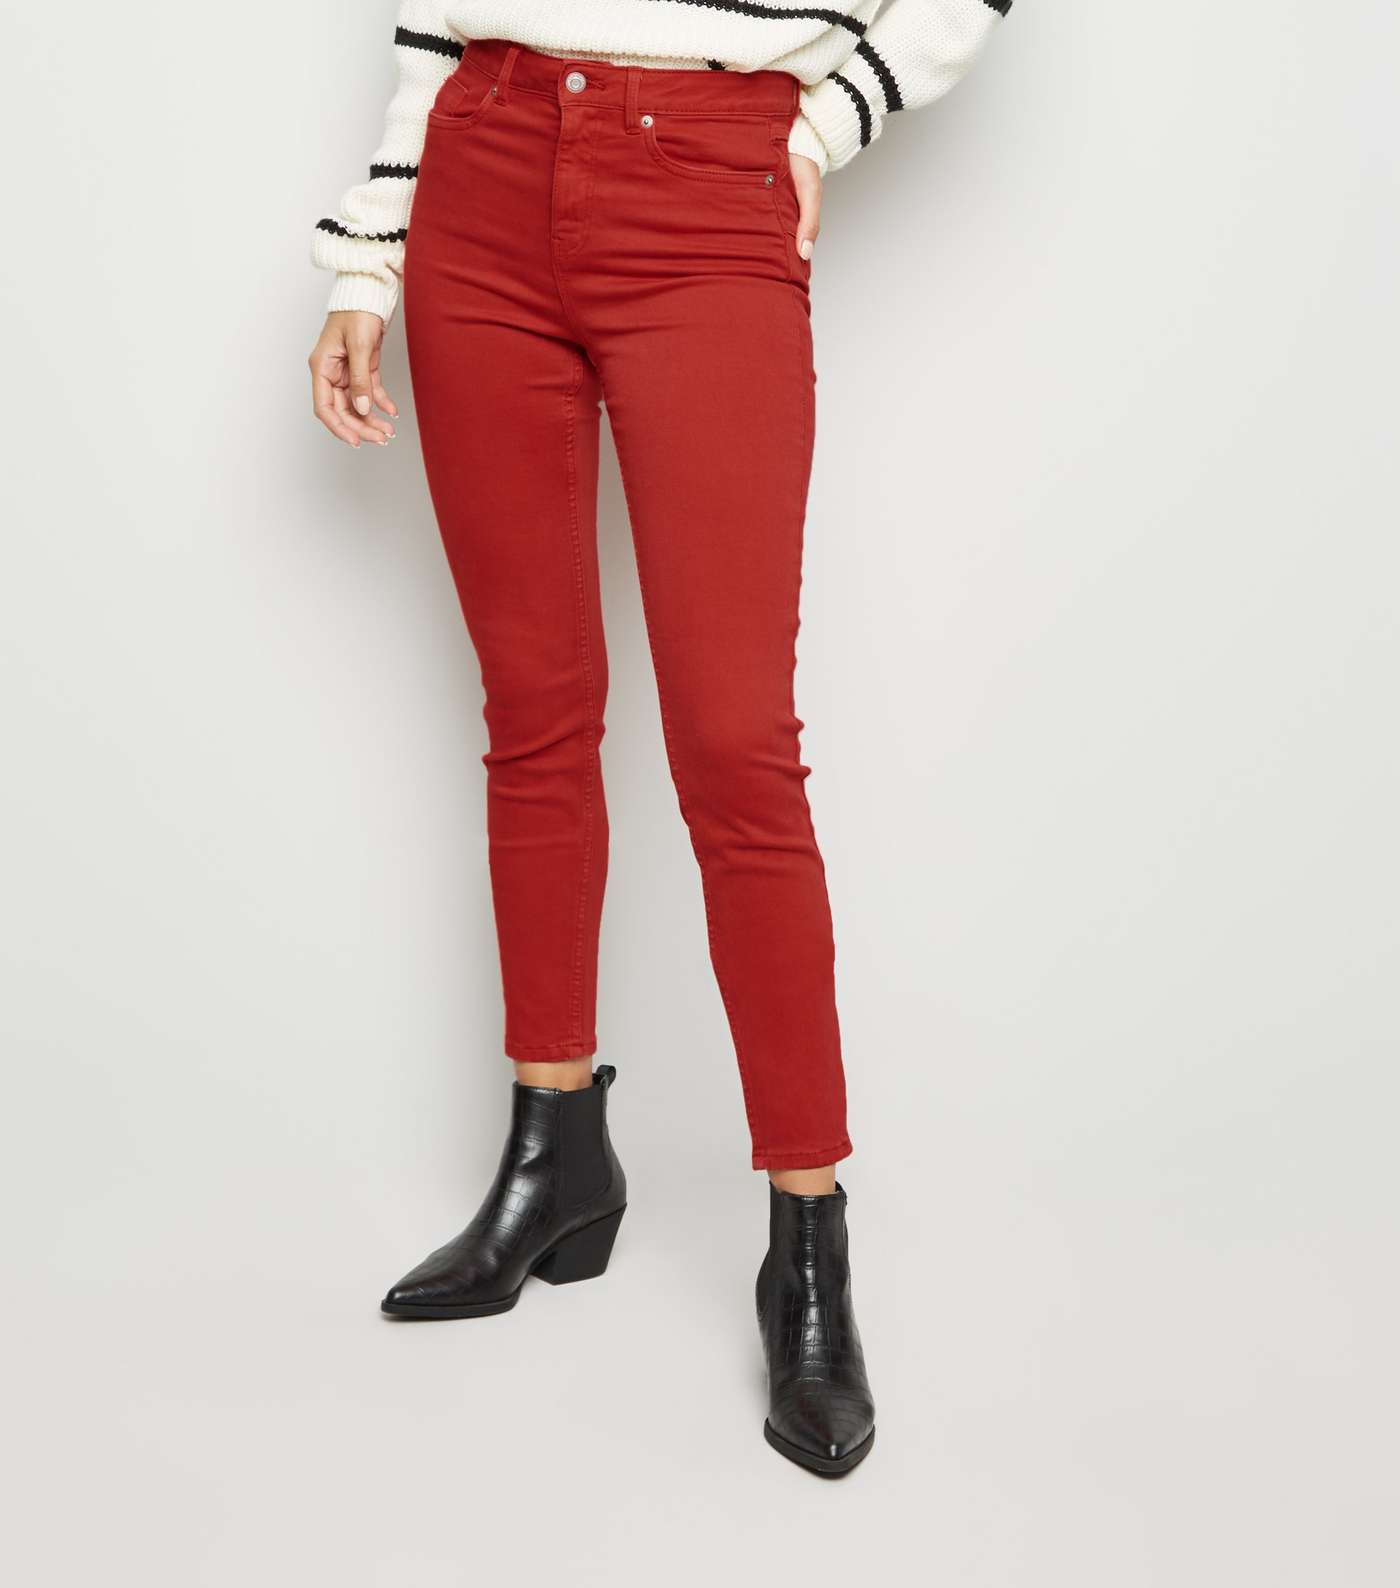 Red High Waist 'Lift & Shape' Skinny Jeans Image 2